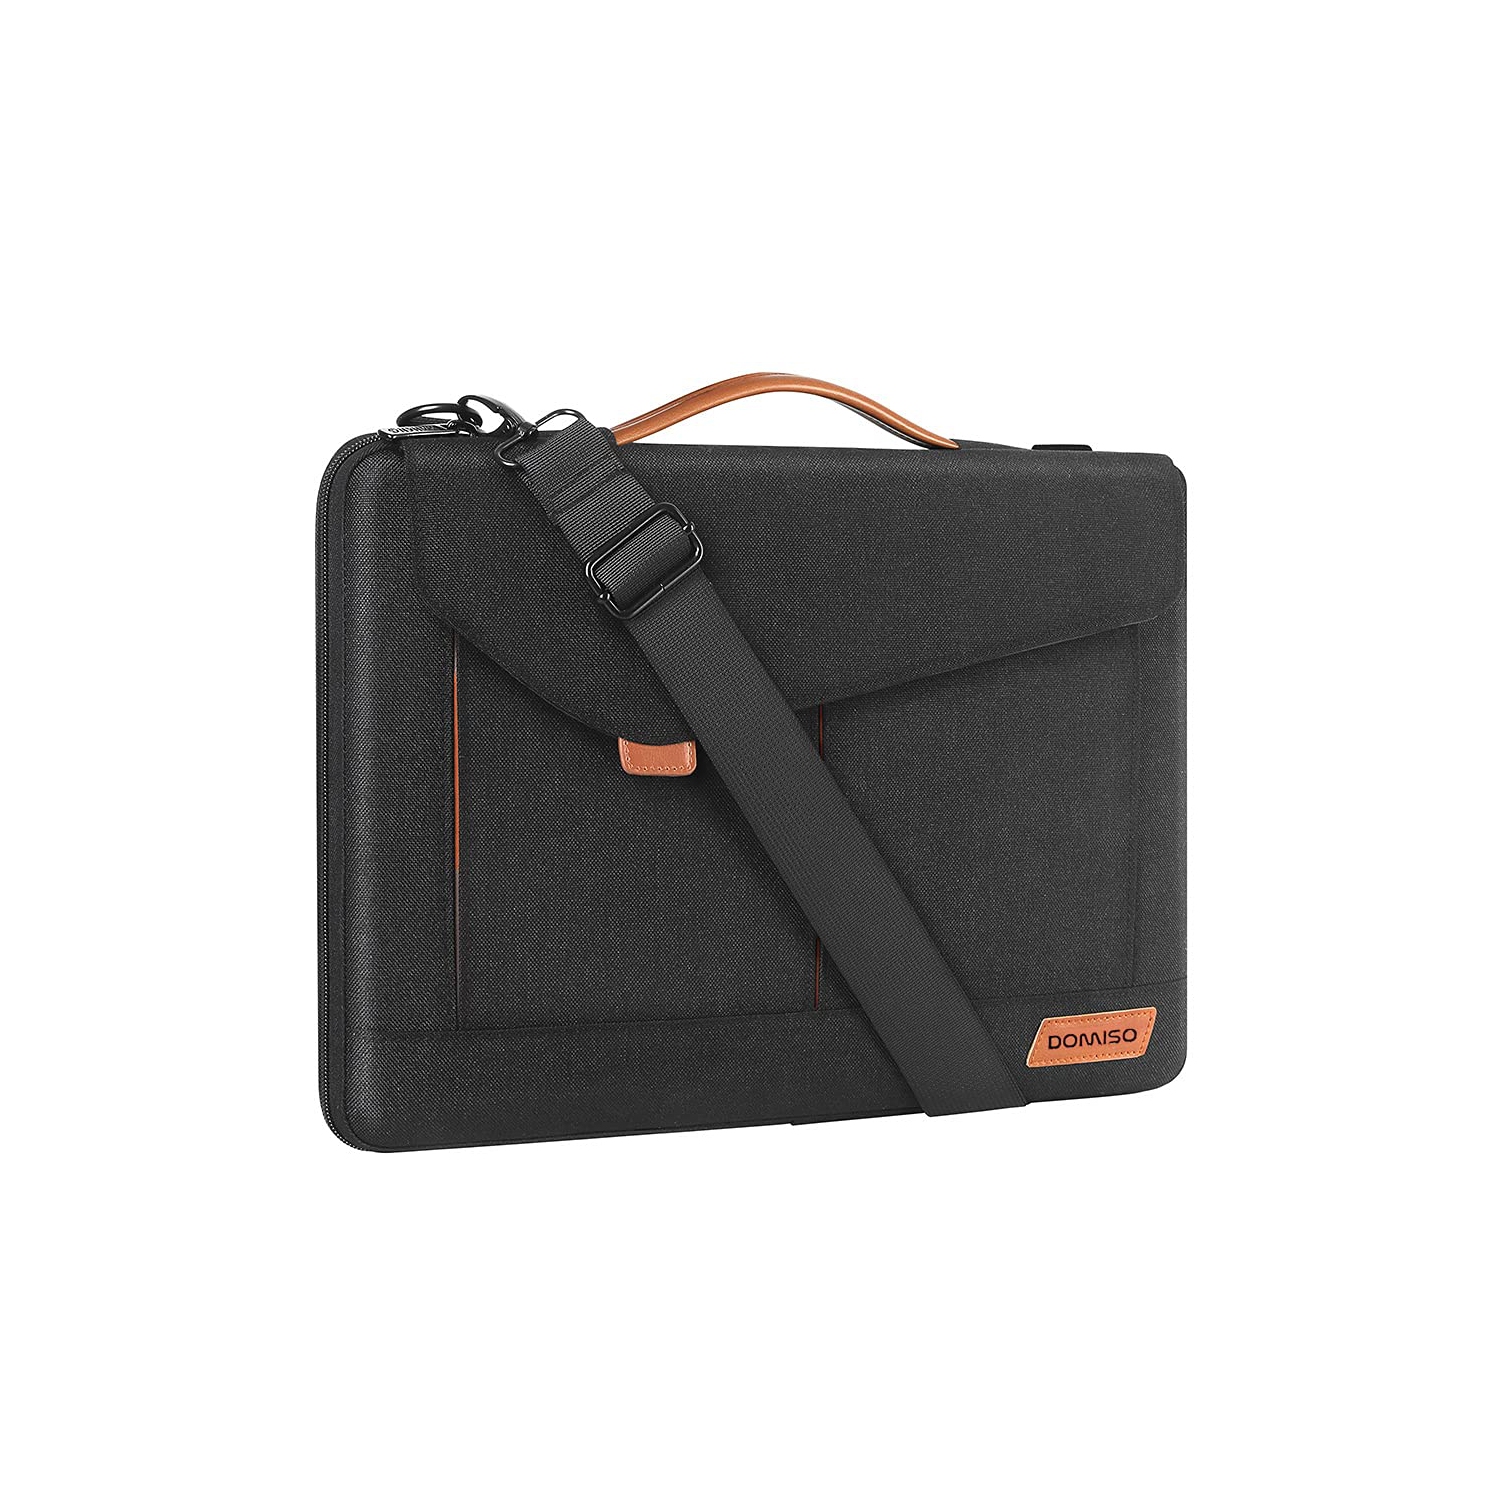 DOMISO 17-17.3 Inch Laptop Sleeve Bag Business Briefcase Messenger Bag Compatible with 17.3" Dell Computer/HP Pavilion 17/Pr